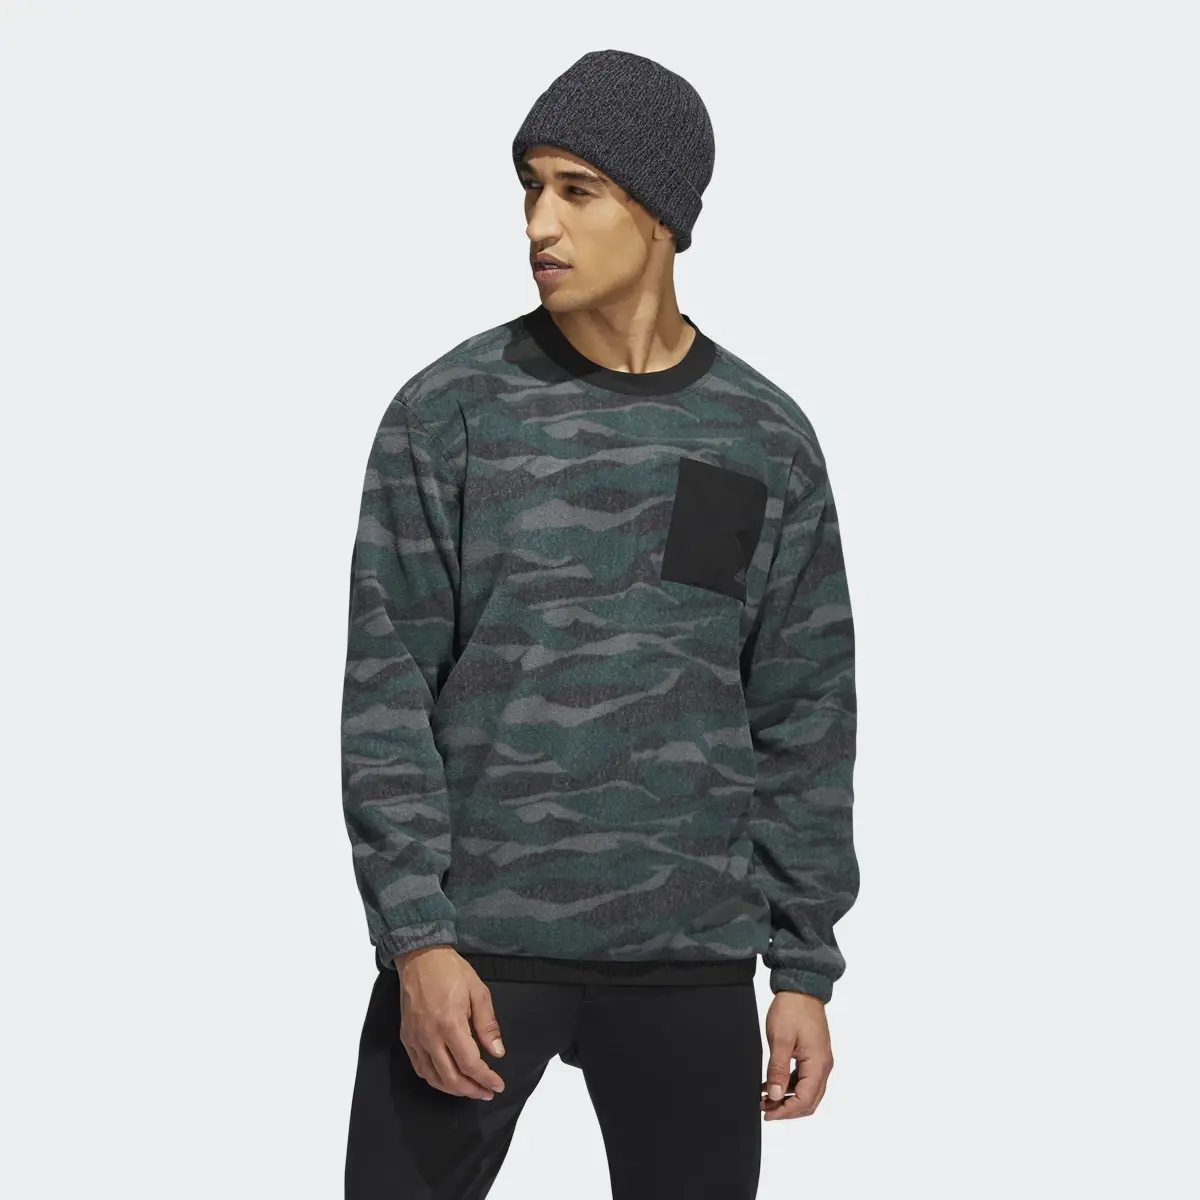 Adidas Texture-Print Crew Sweatshirt. 2